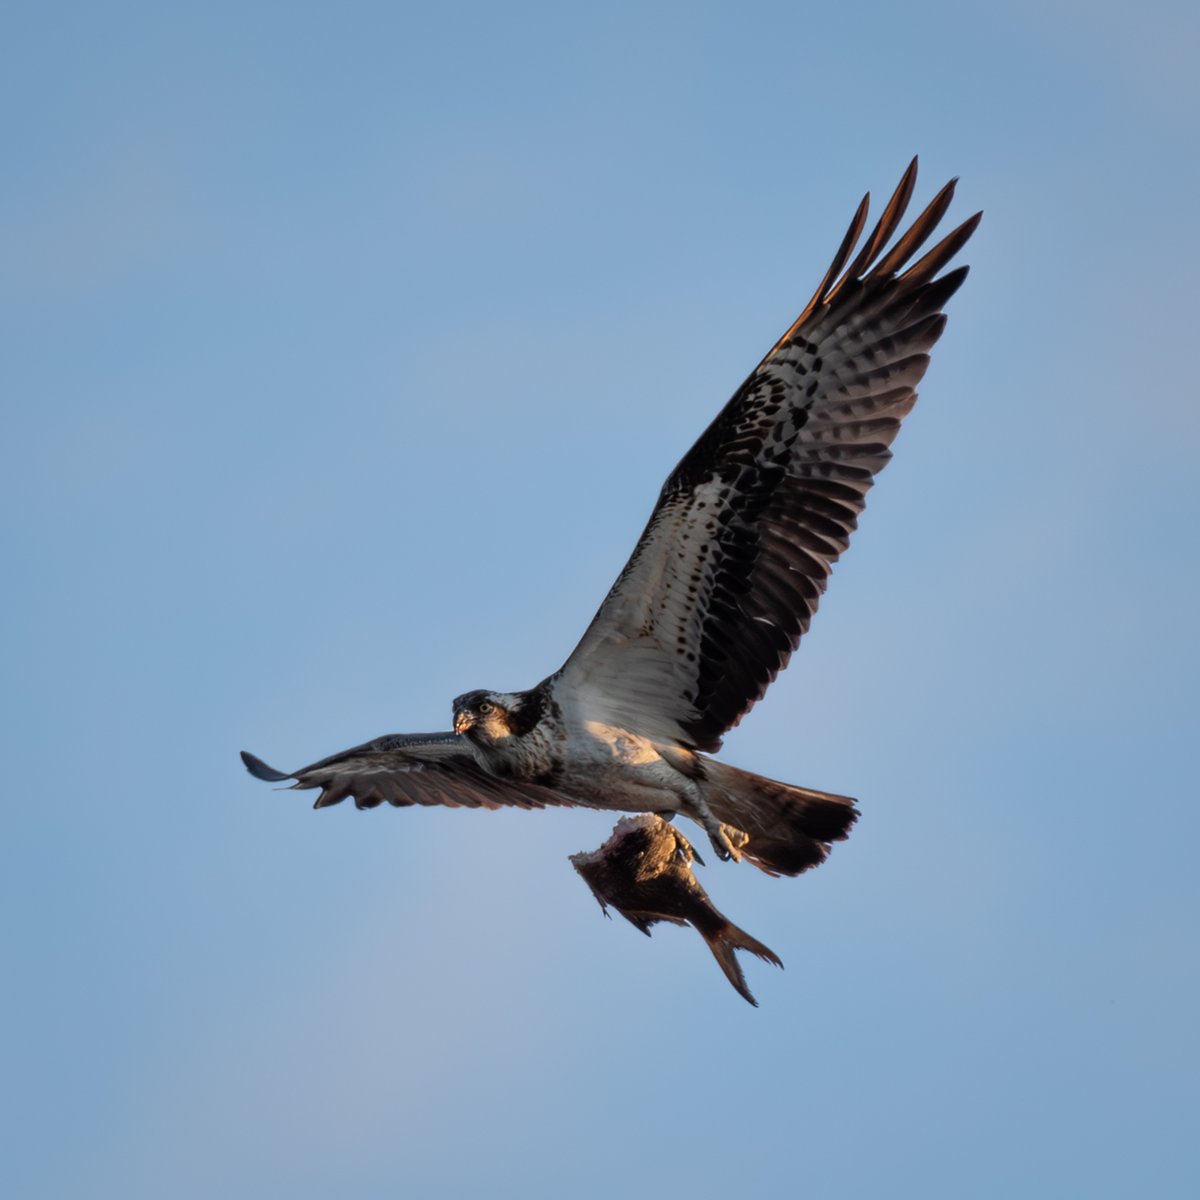 Mestarikalastaja
#osprey #sääksi #pandionhaliaetus